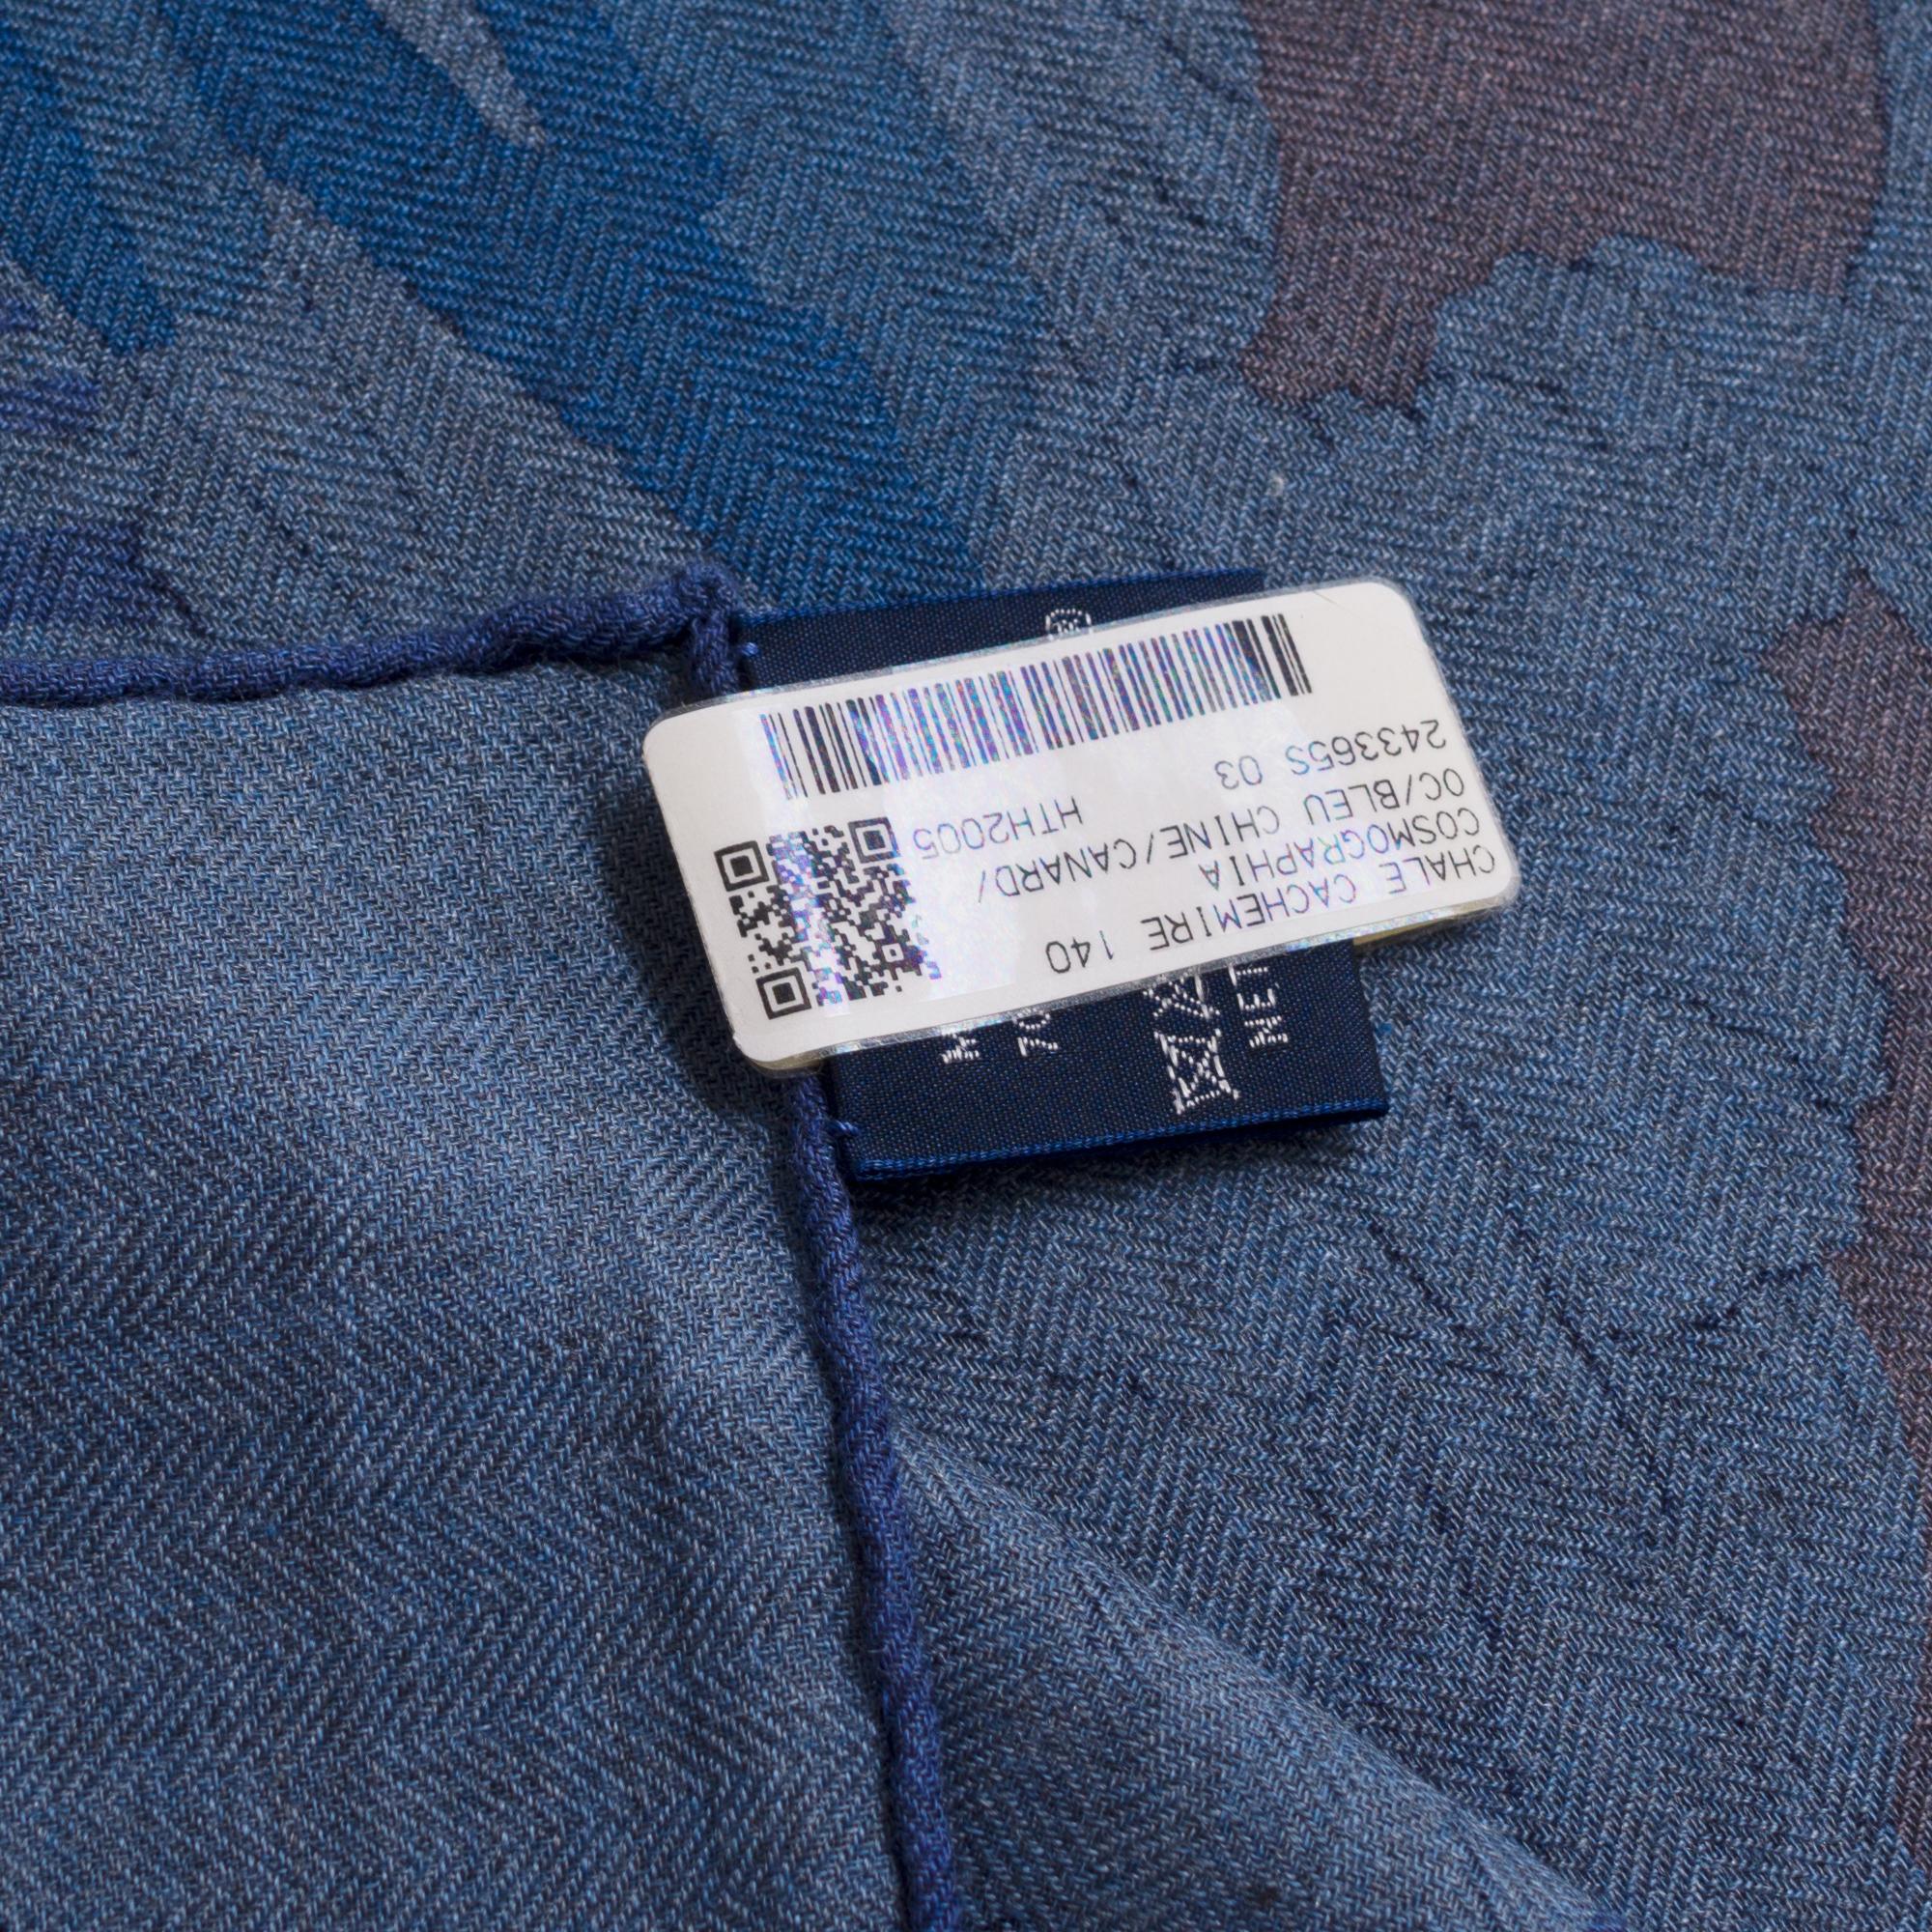 Blue Brand New- Hermès Shawl 140 “Cosmographia Universalis” in cashmere and silk